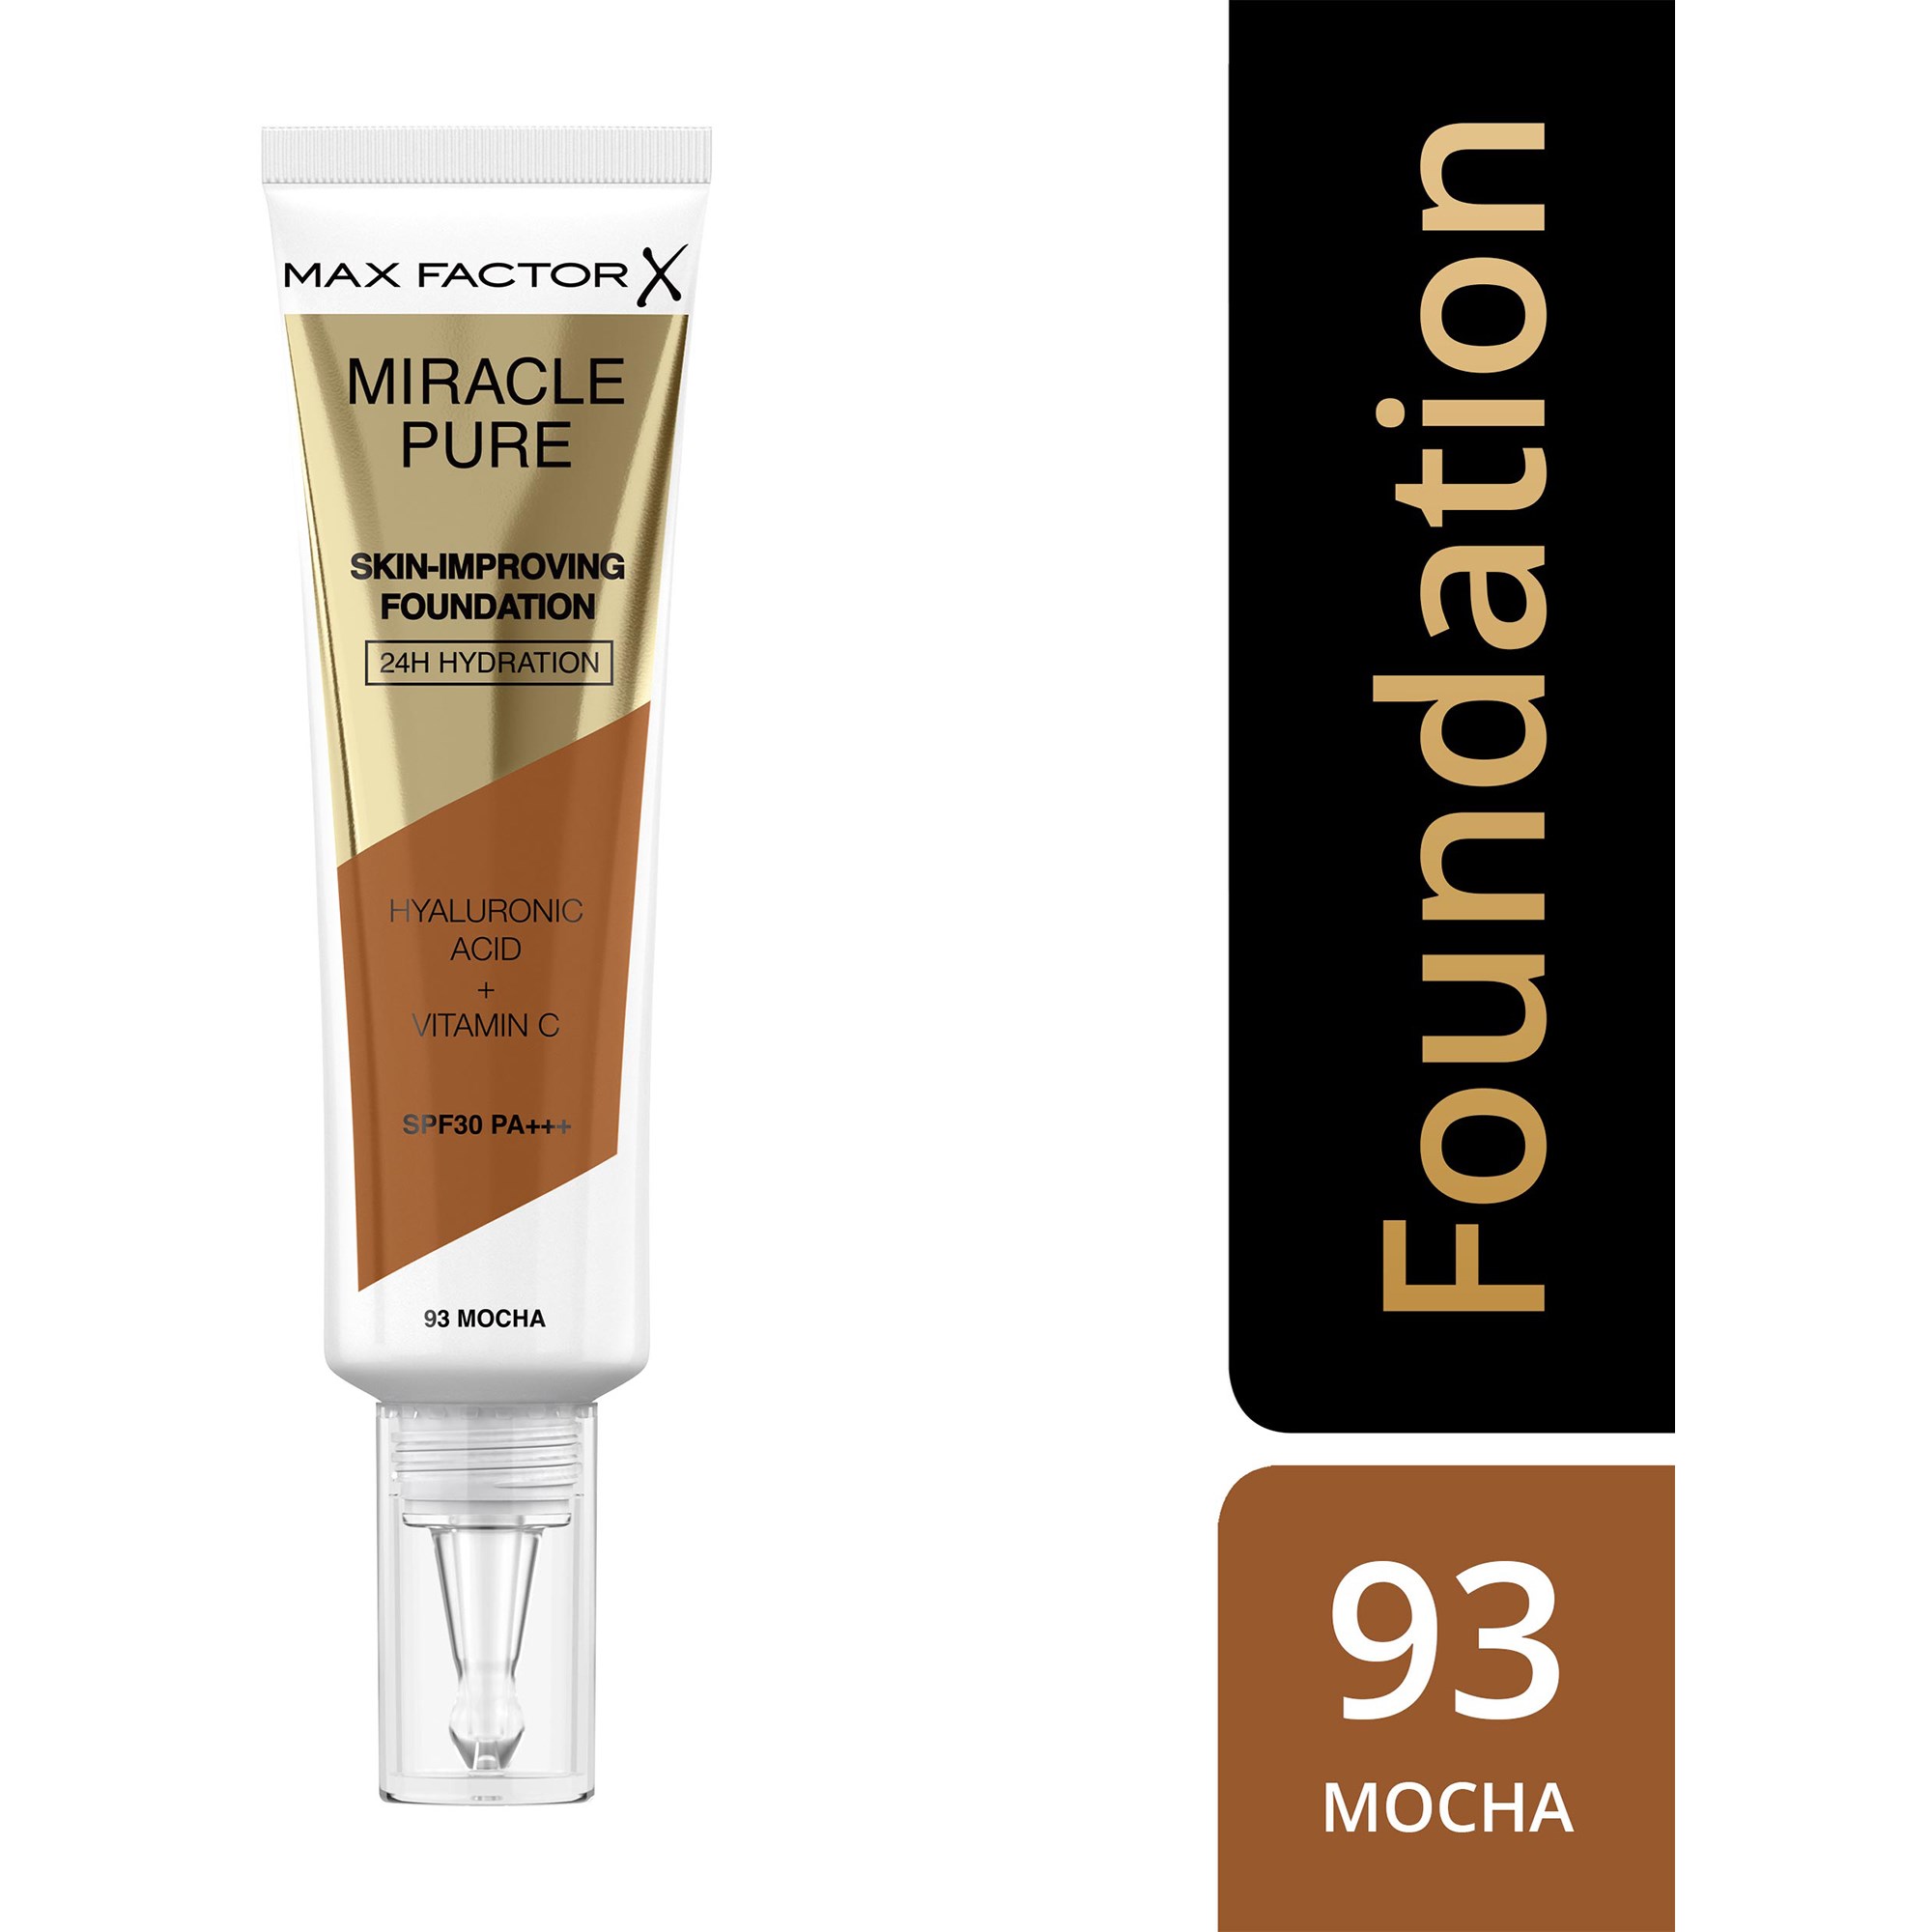 Bilde av Max Factor Miracle Pure Skin-improving Foundation 93 Mocha